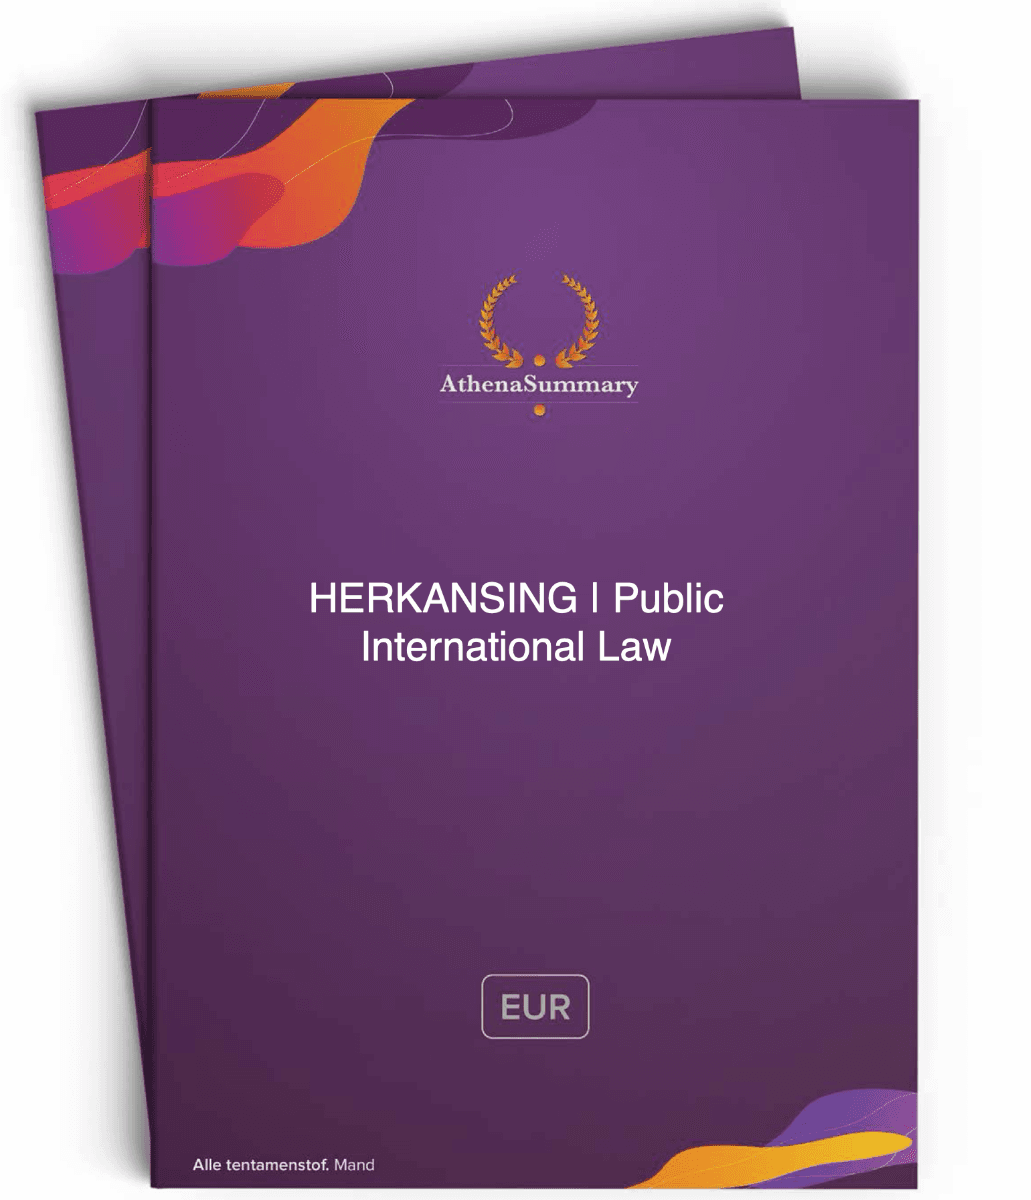 HERKANSING | Public International Law